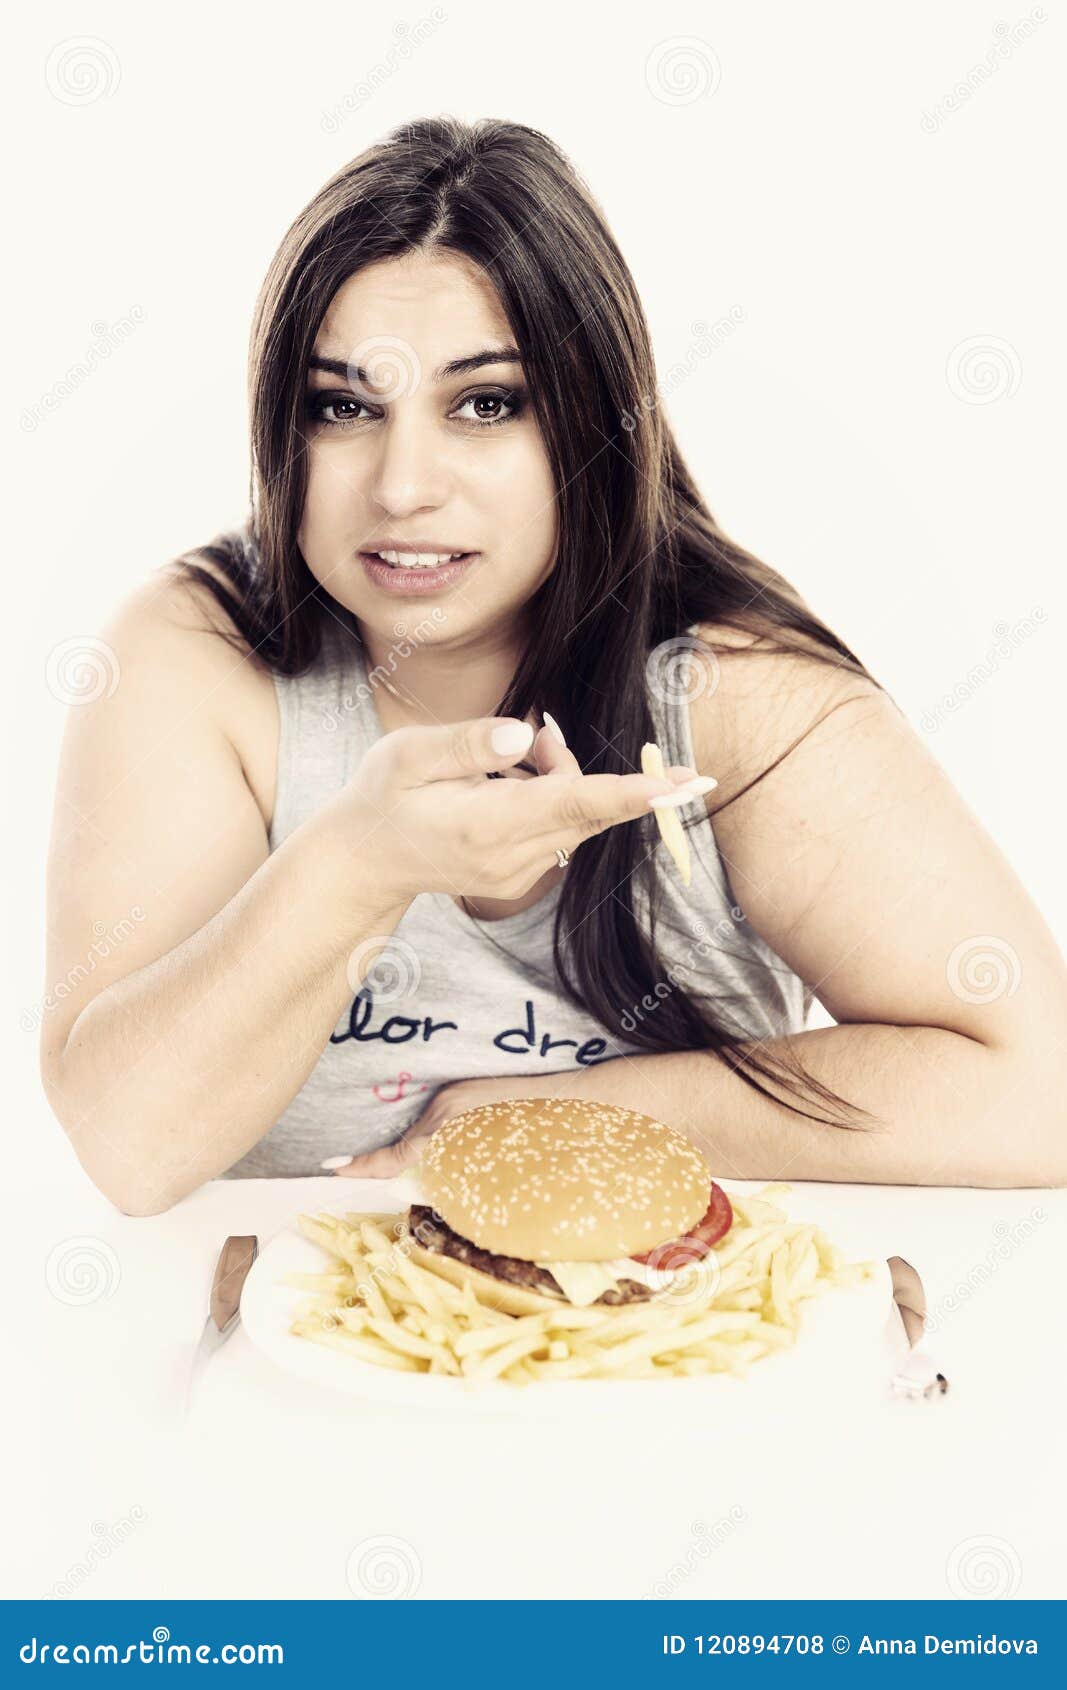 thick white girl eating girl